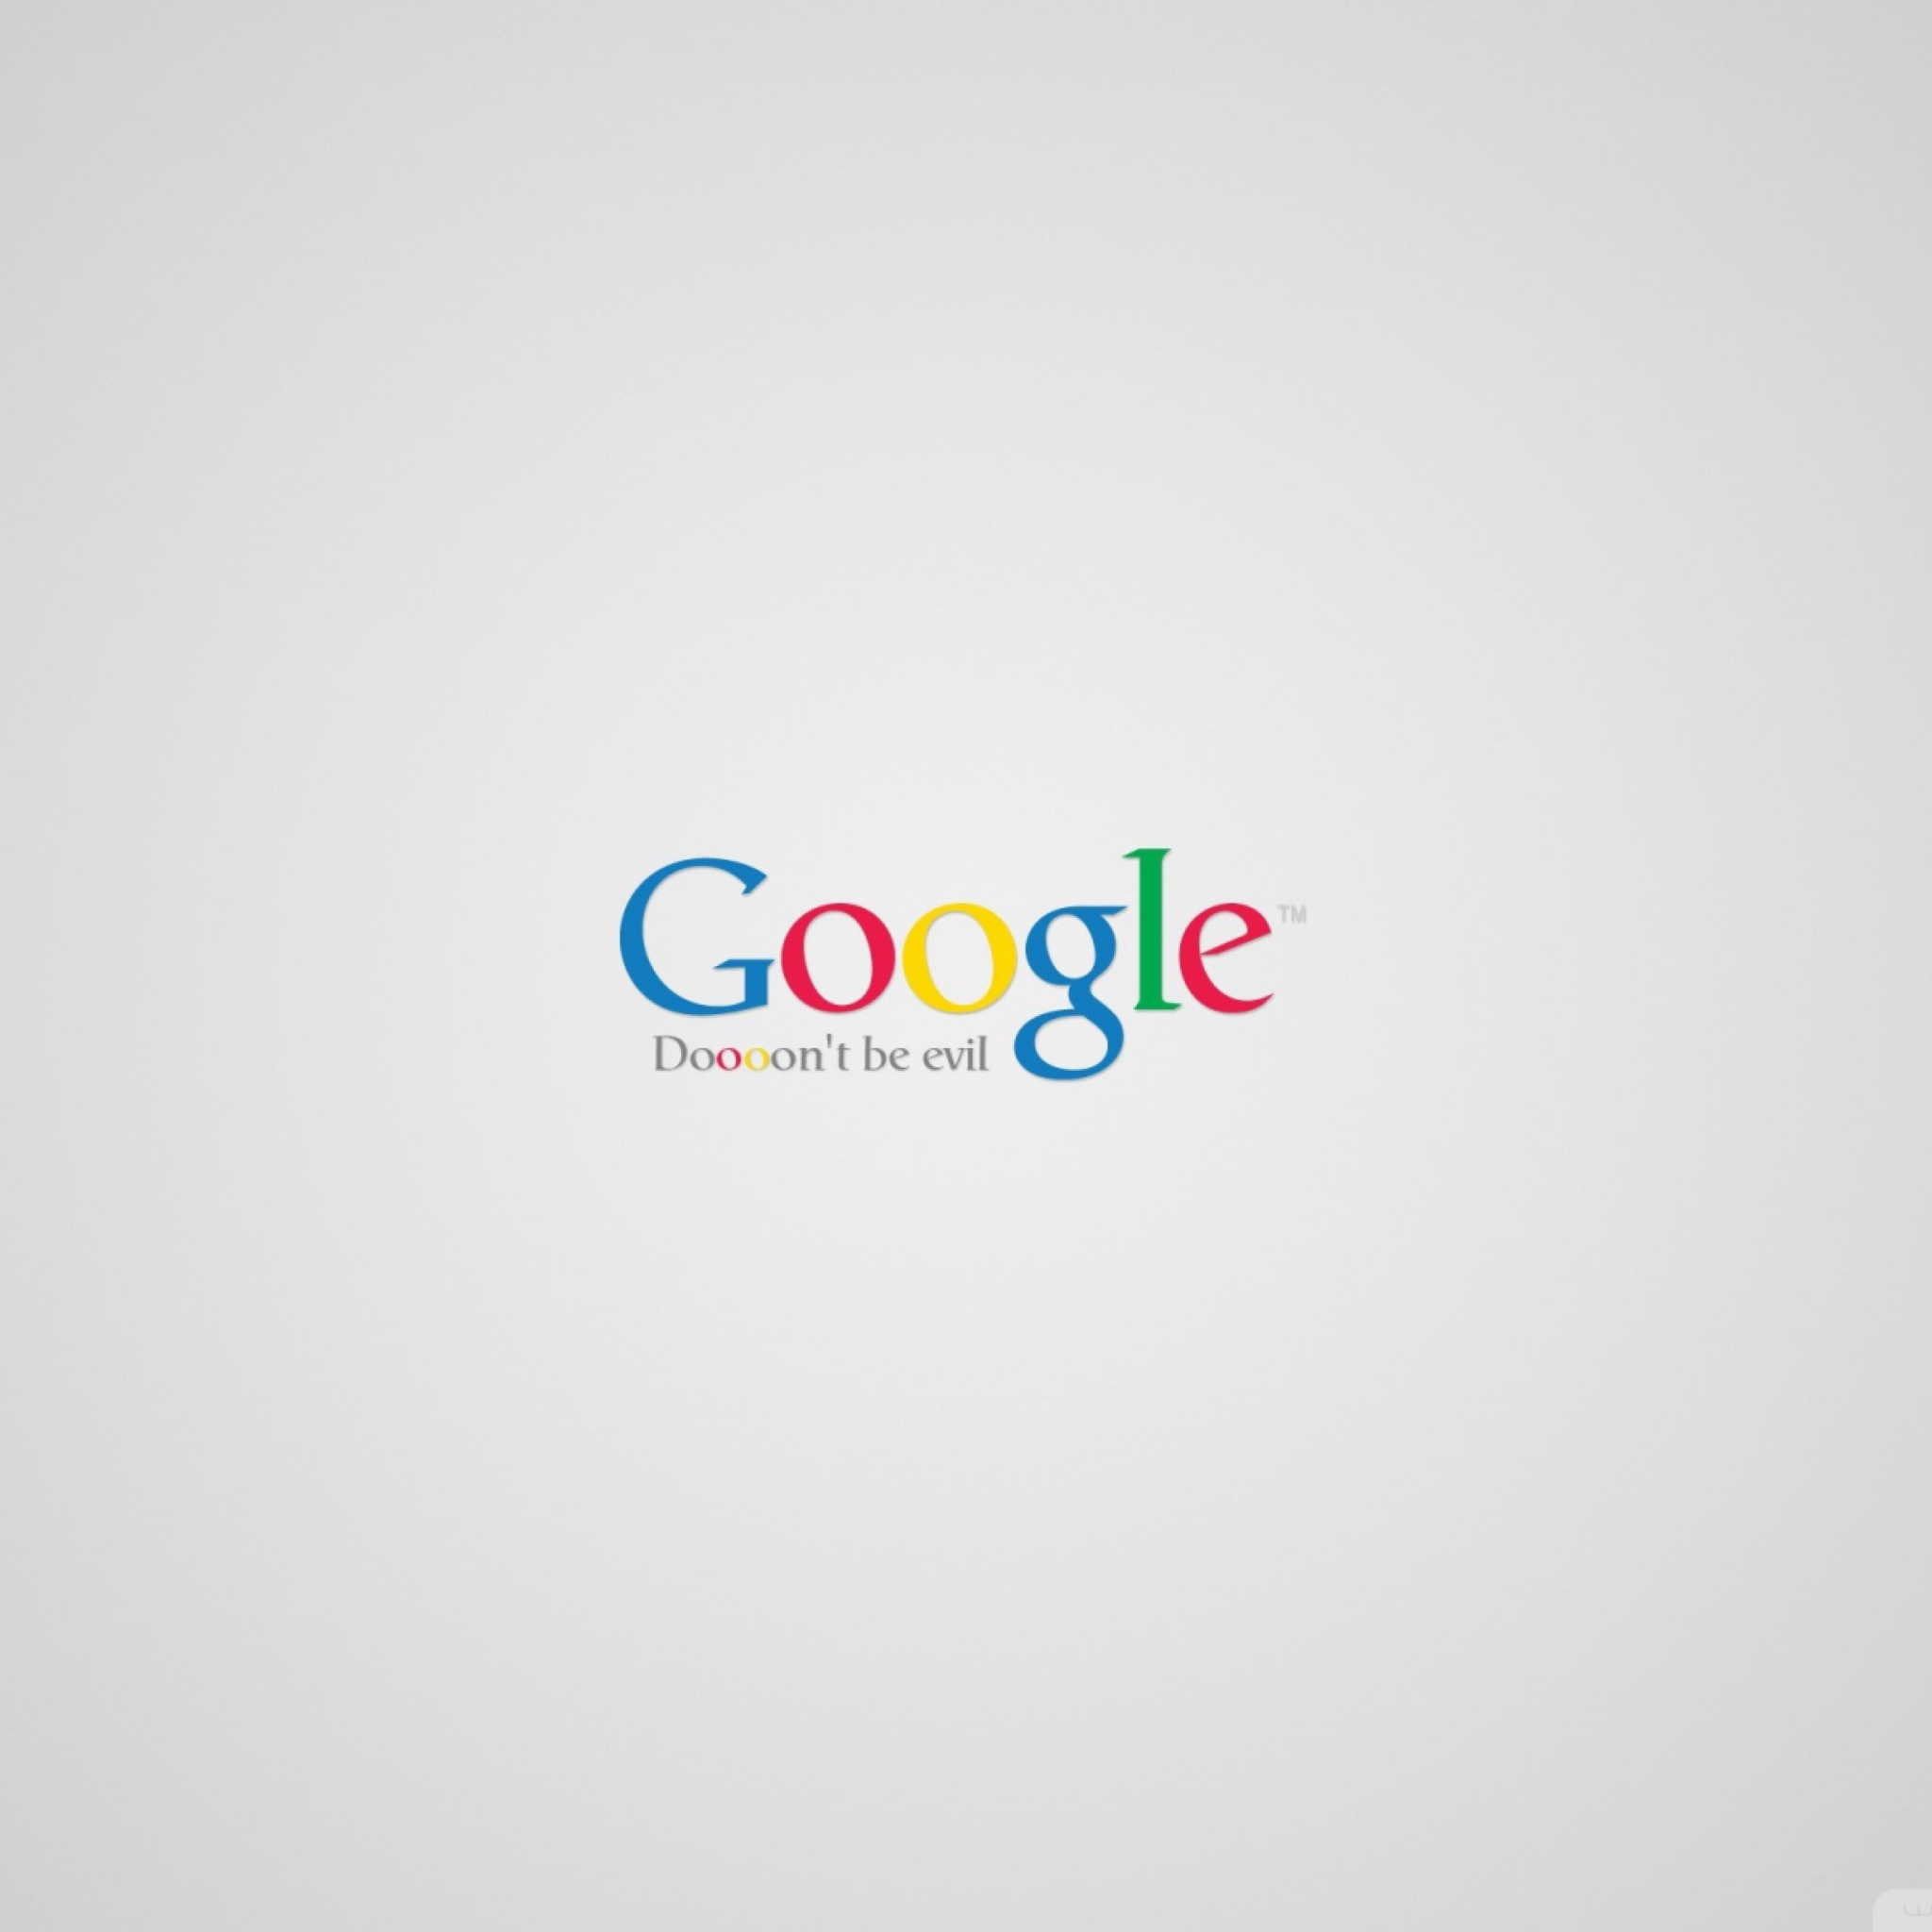 Das Google - Don't be evil Wallpaper 2048x2048